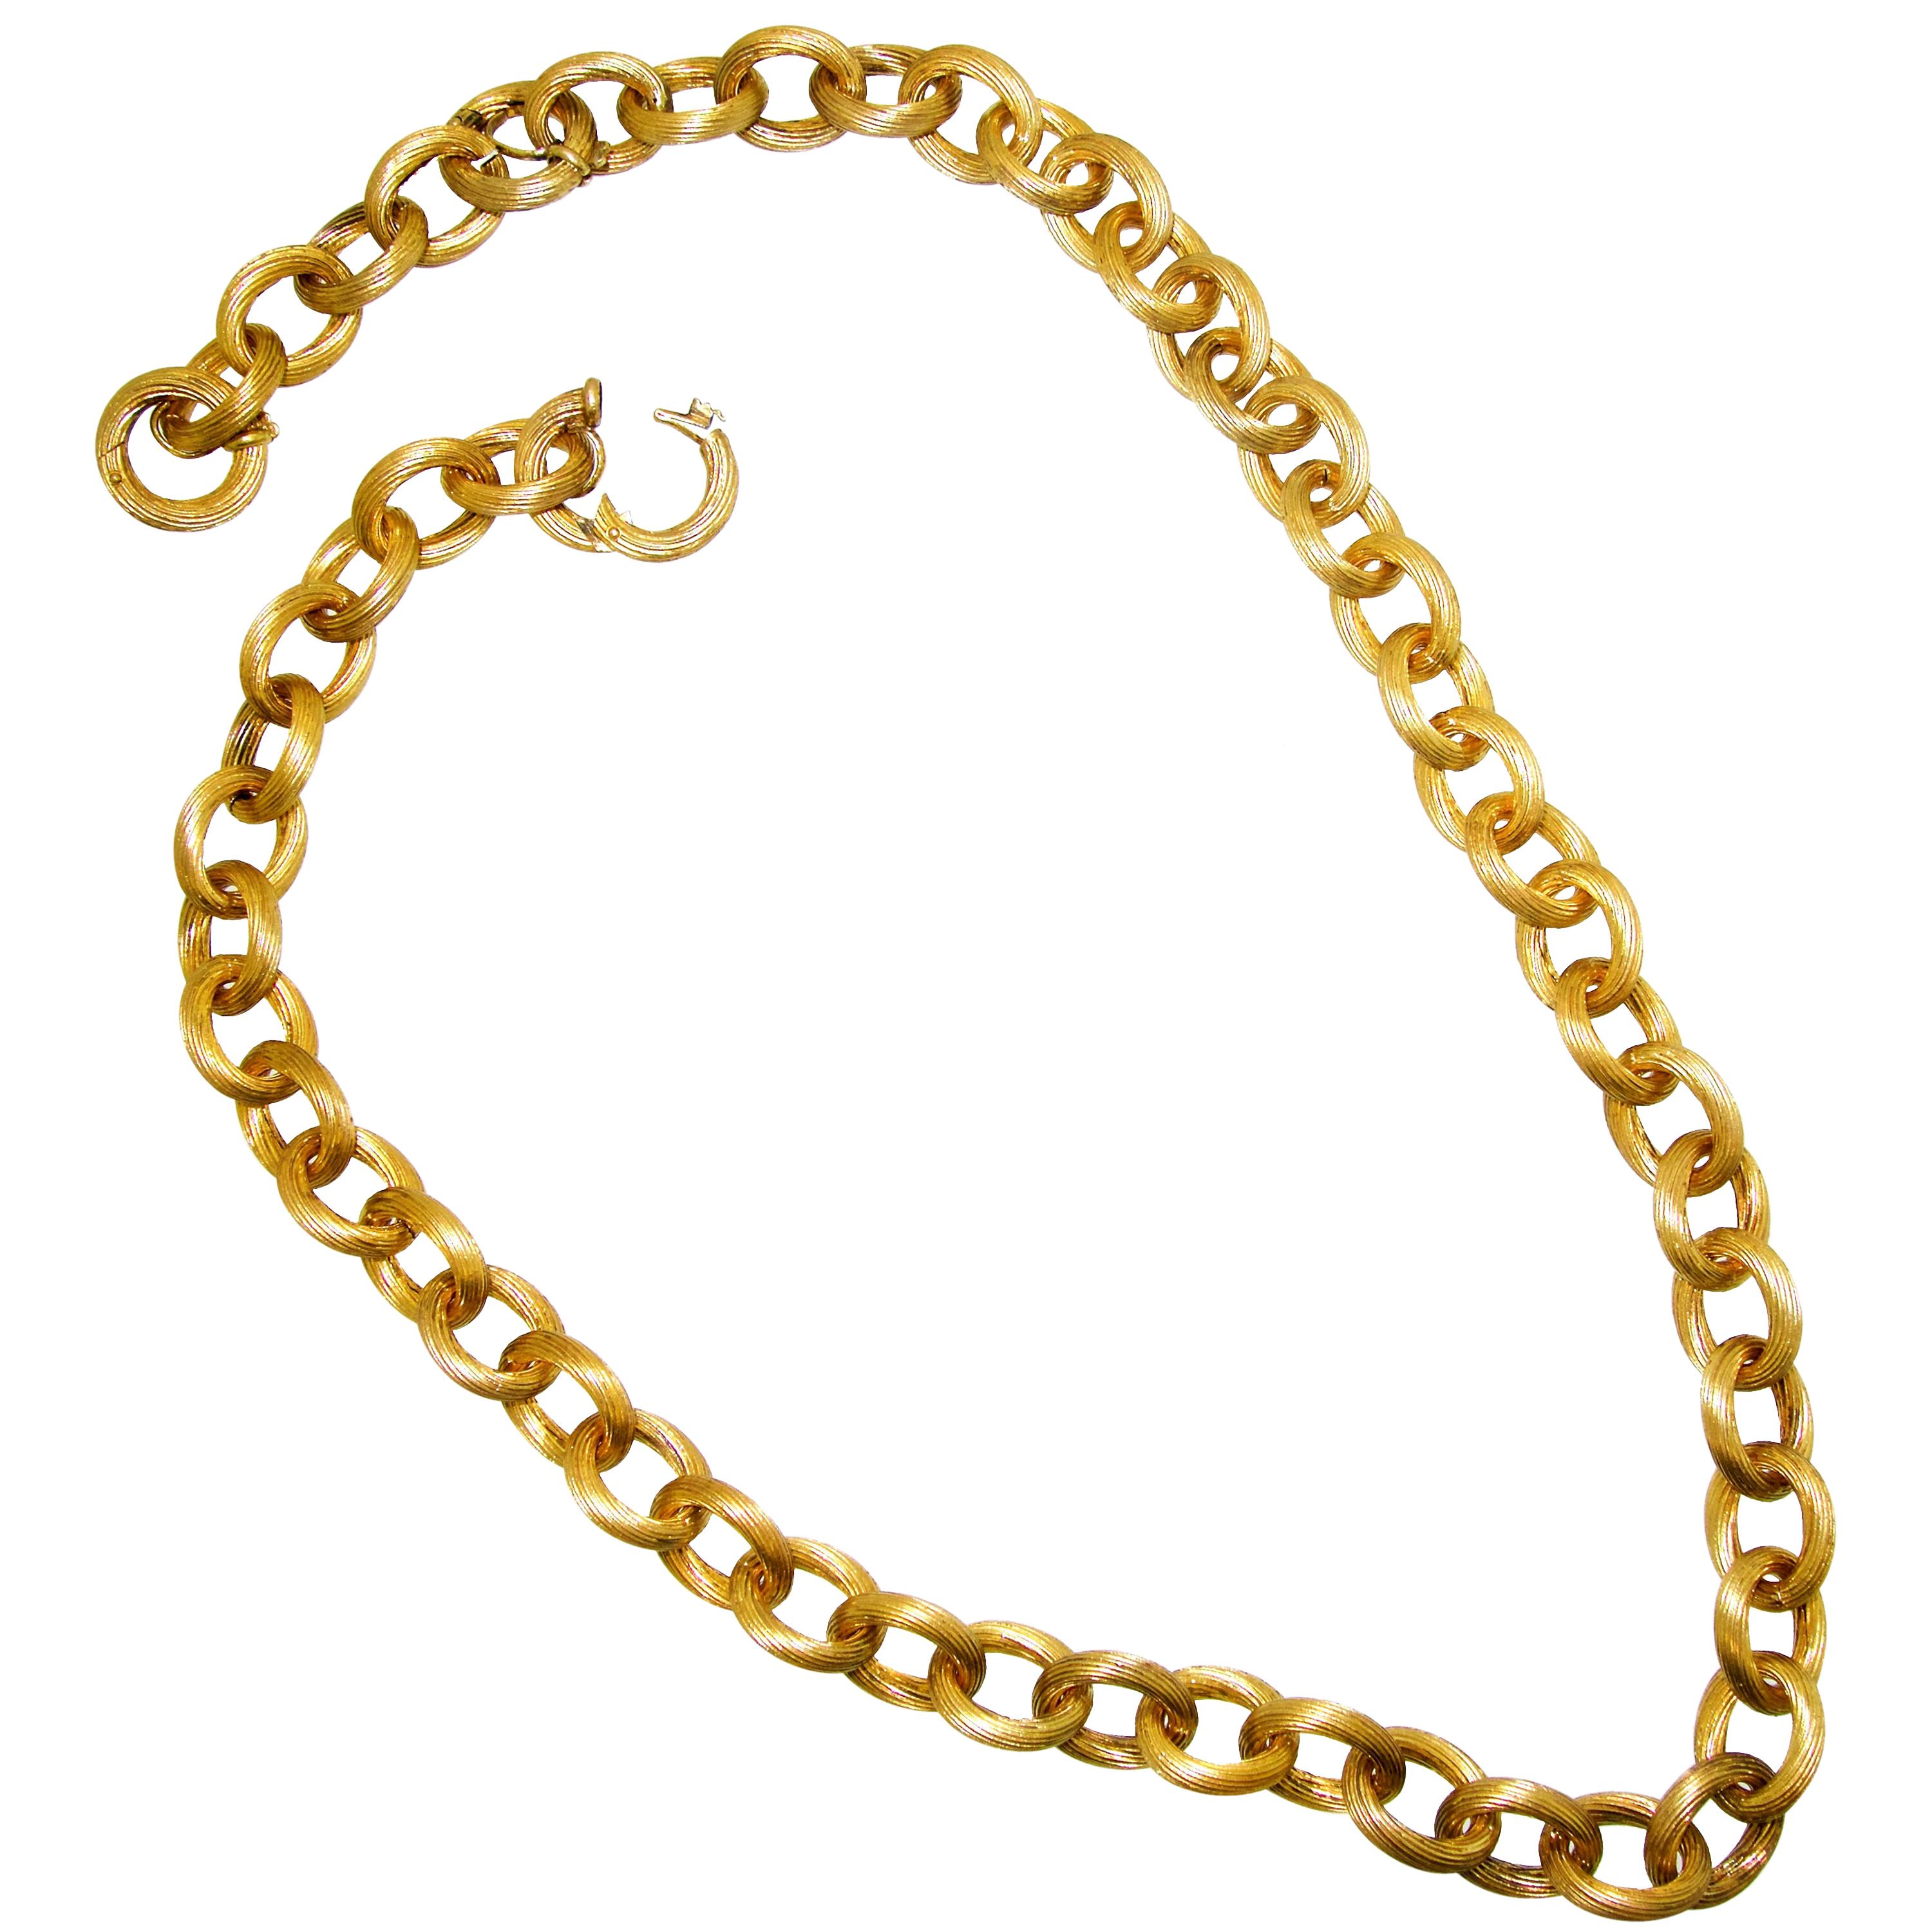 Antique Gold Chain, circa 1885